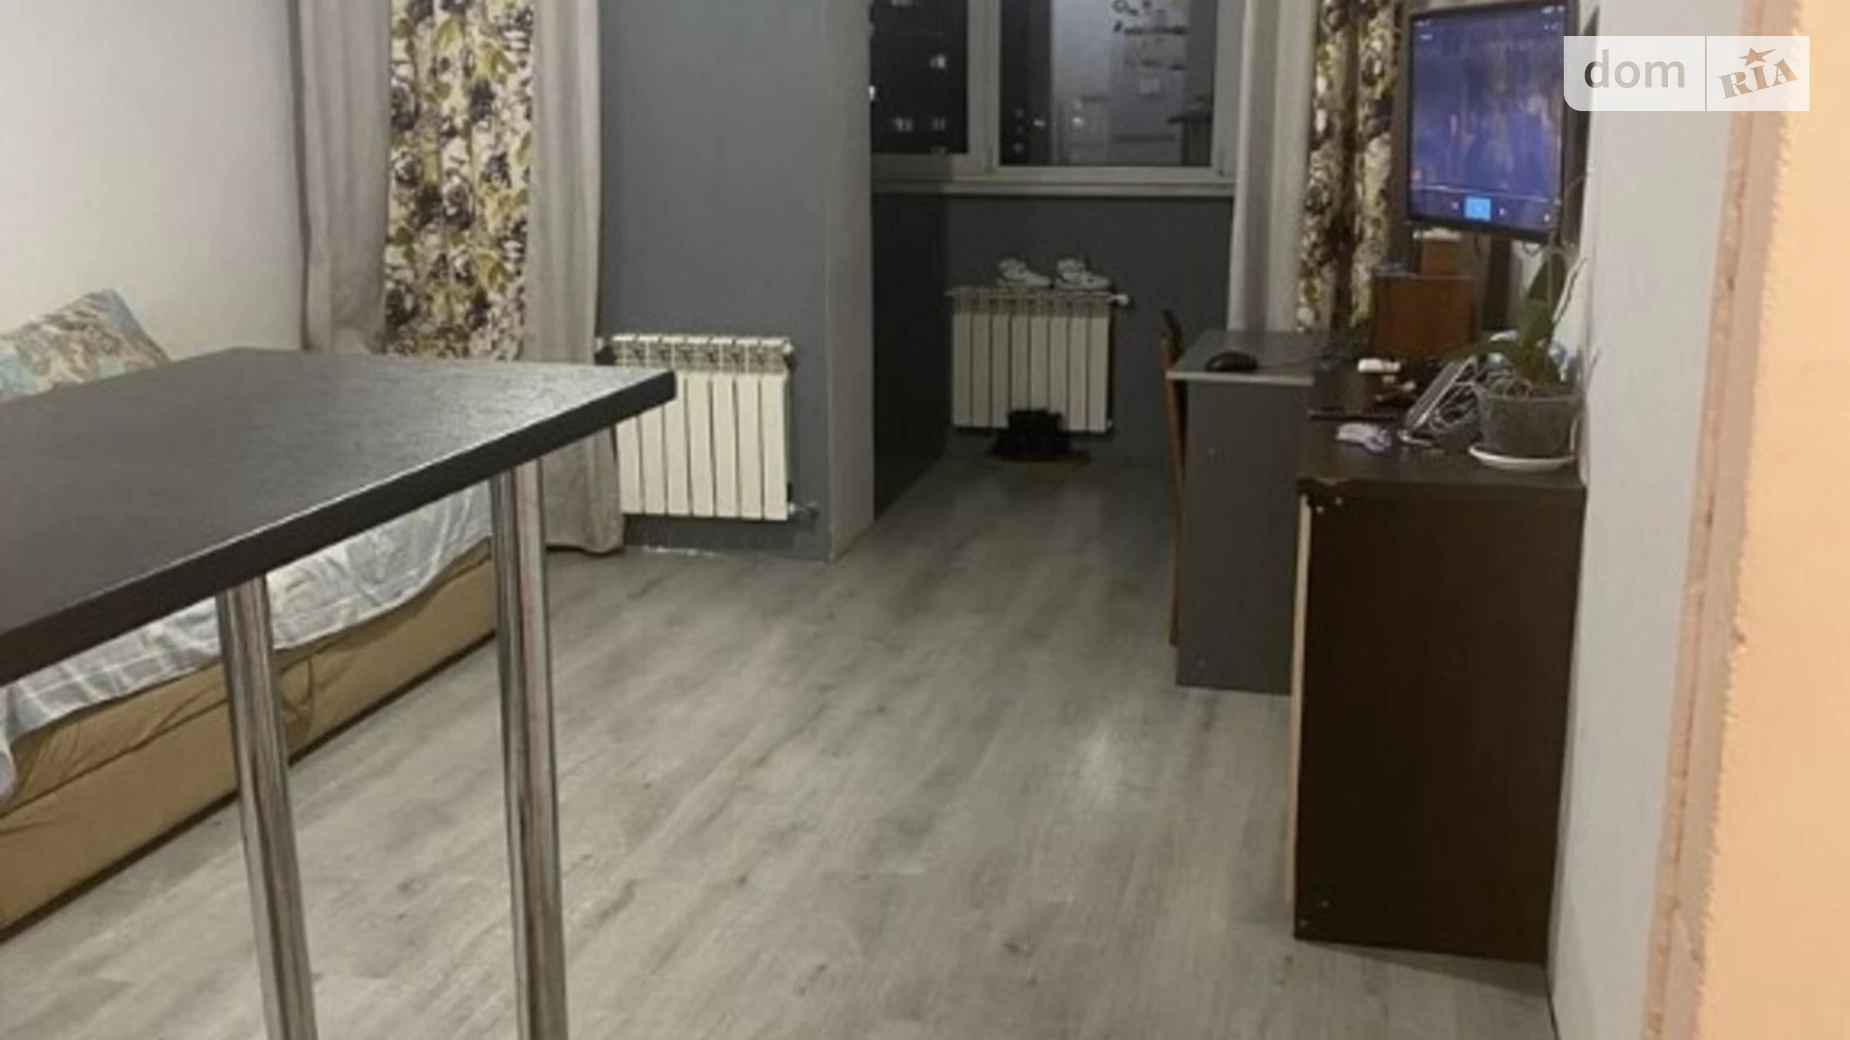 Продається 2-кімнатна квартира 80.2 кв. м у Хмельницькому, вул. Панаса Мирного - фото 4